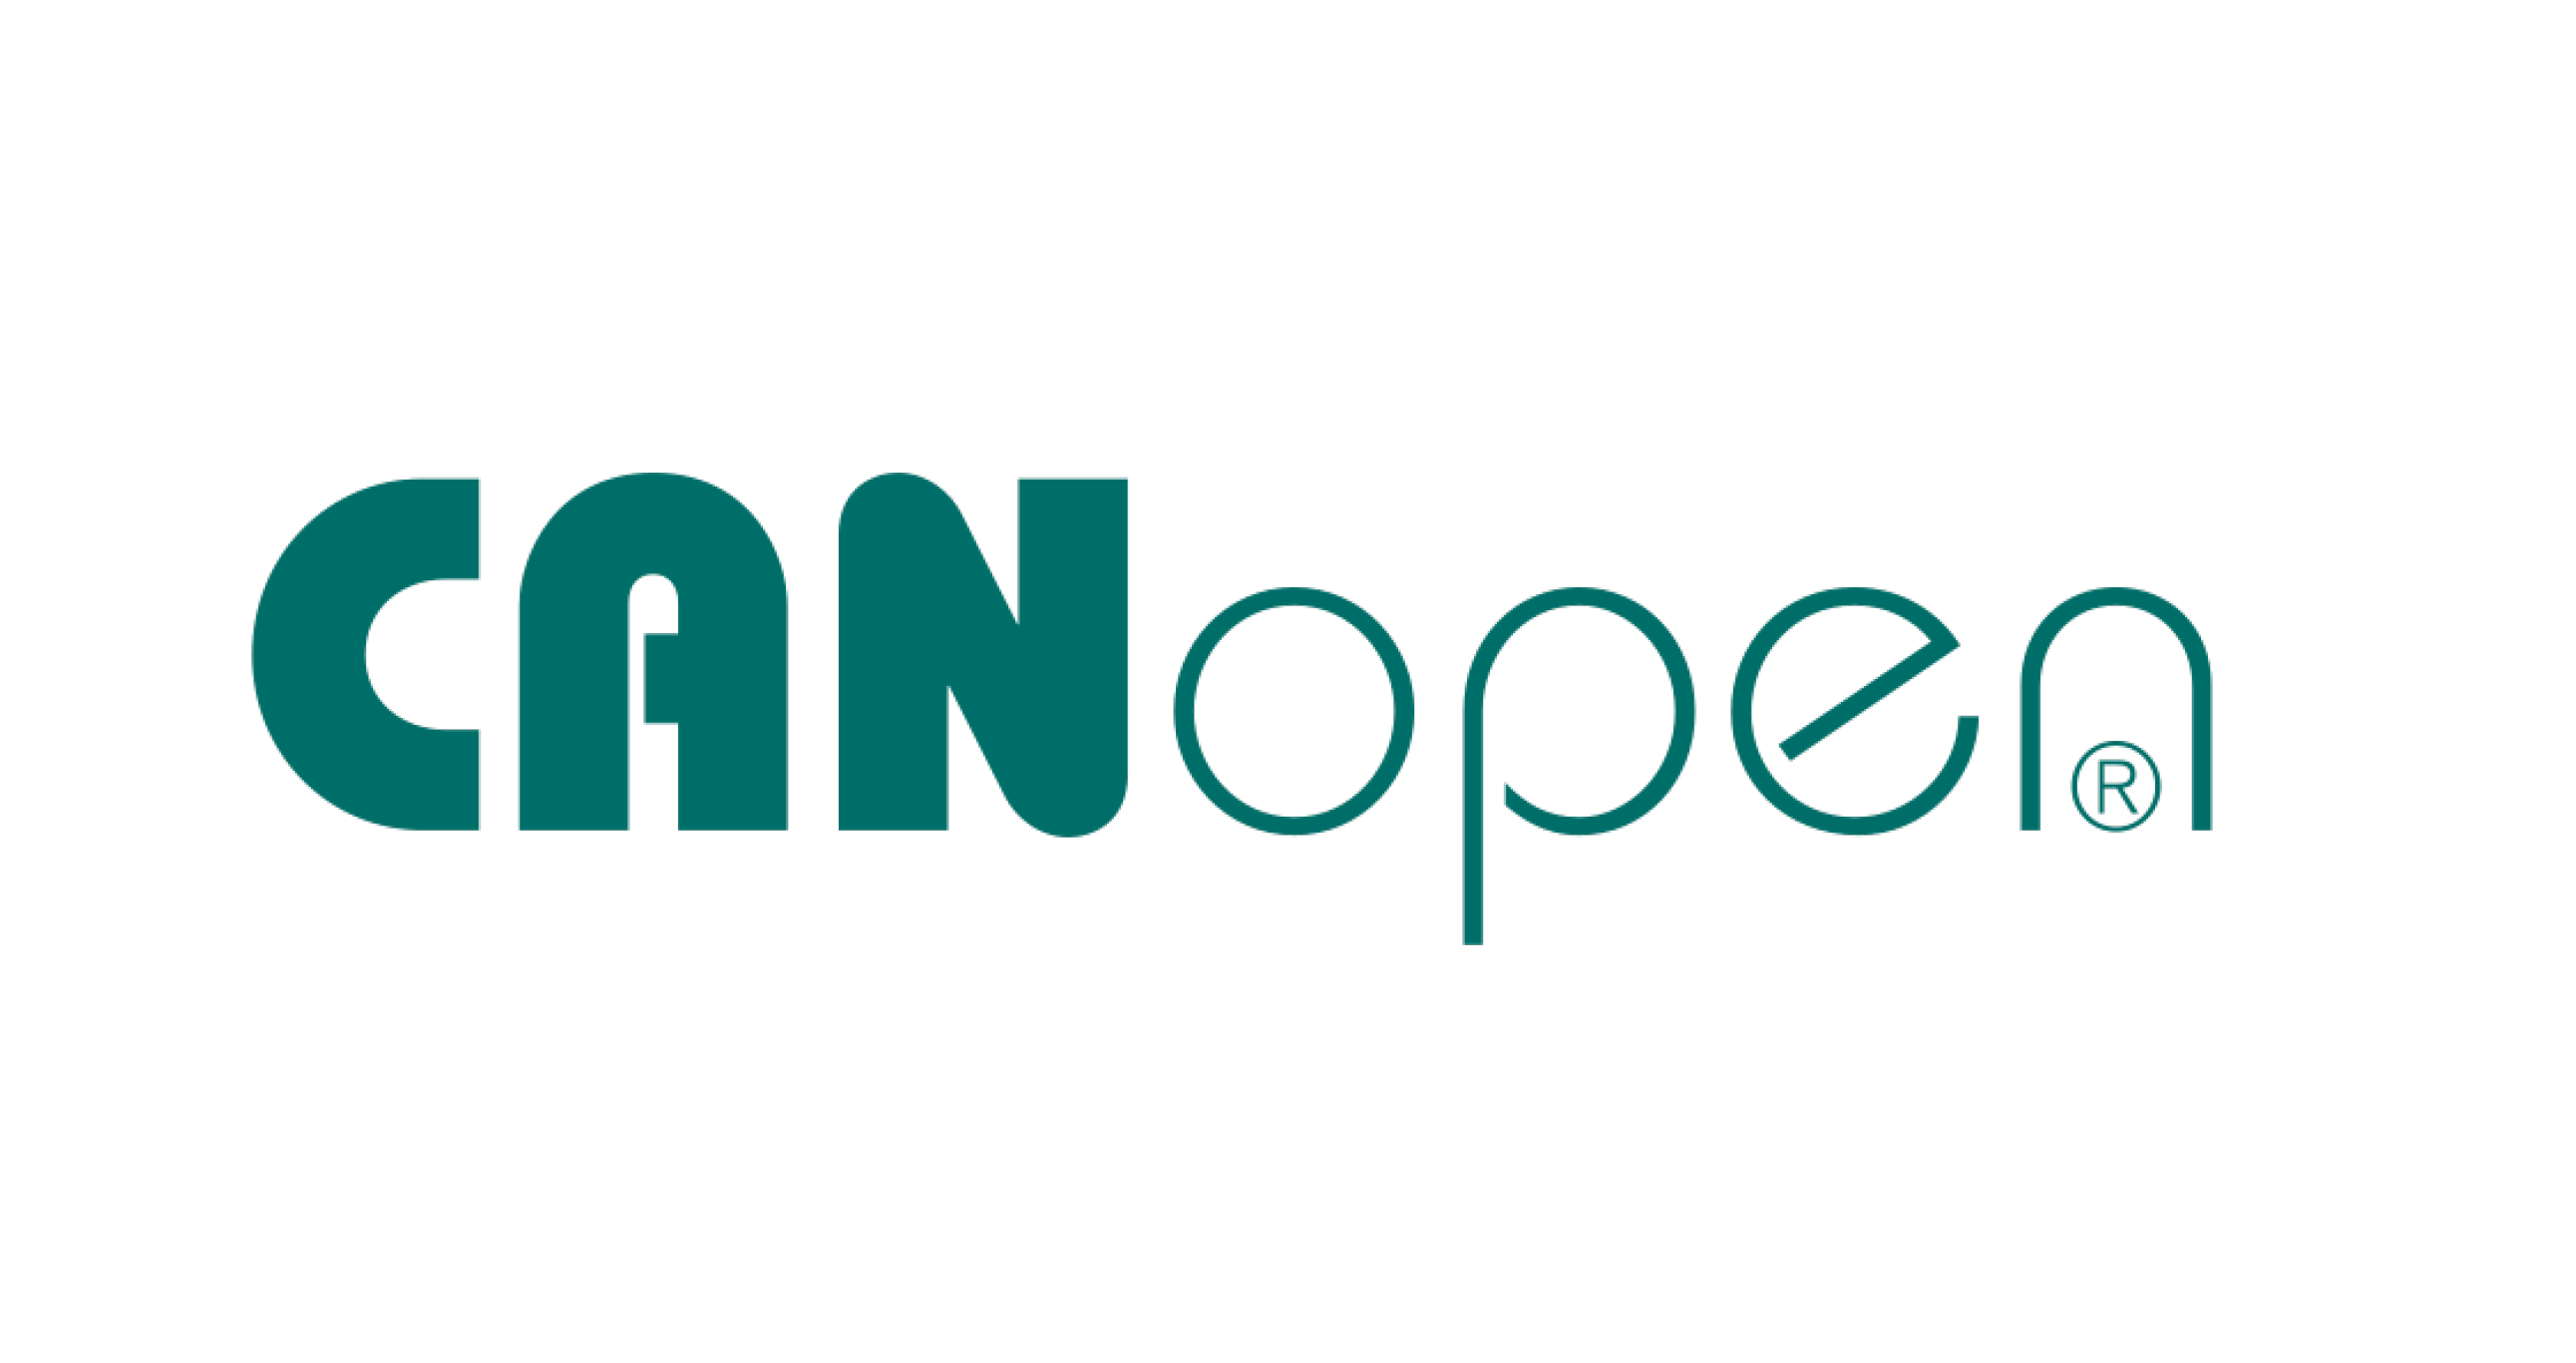 Logo CANopen